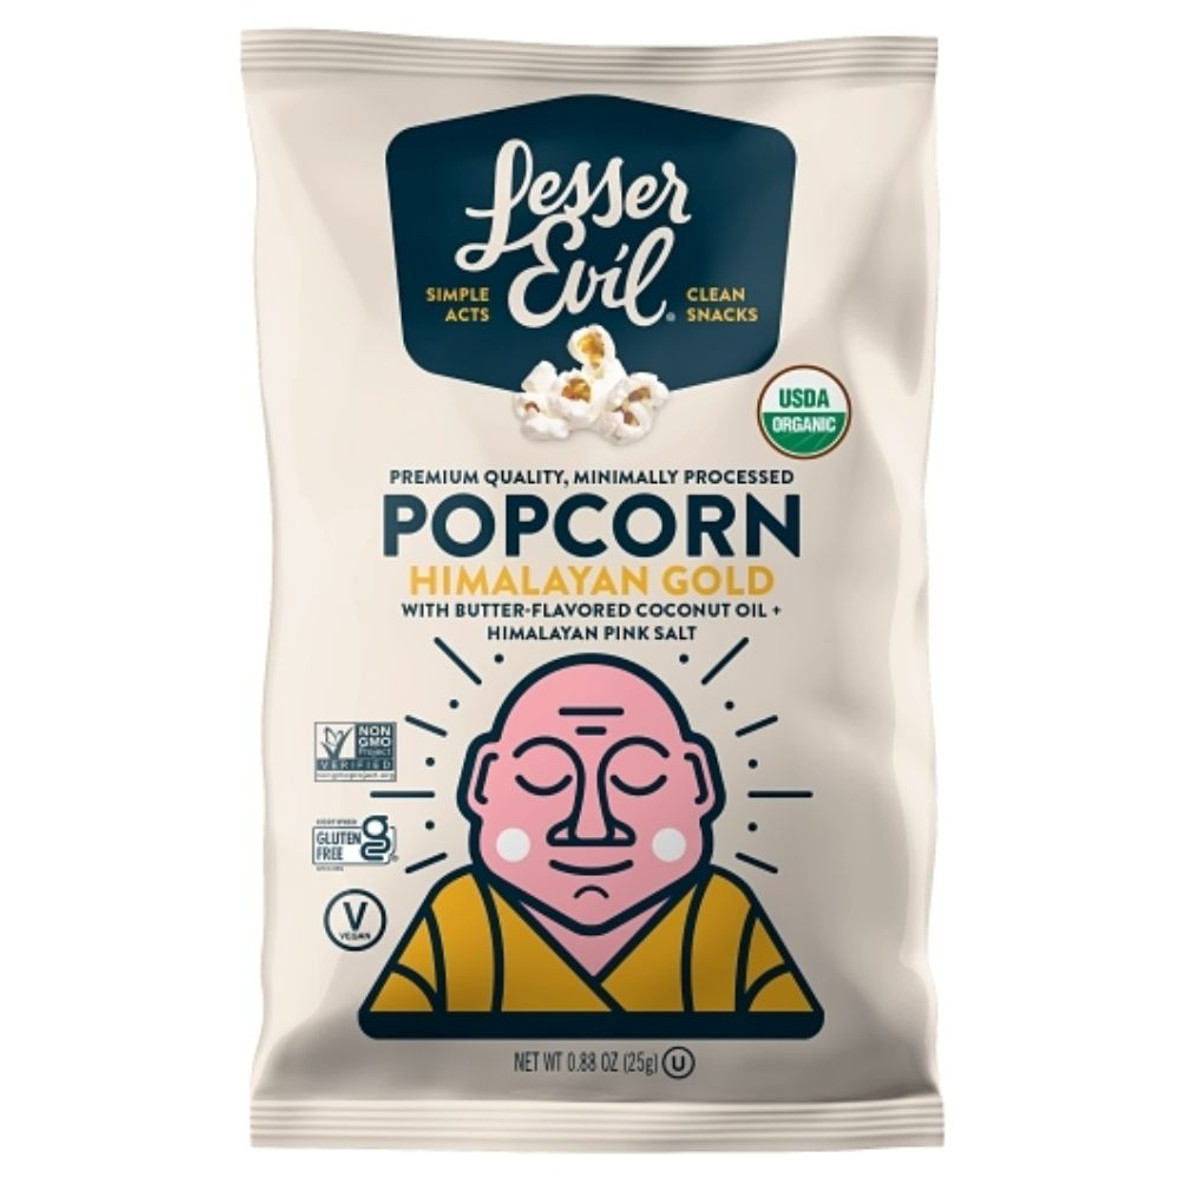 Lesserevil Organic Popcorn Himalayan Gold, 0.88 Ounces